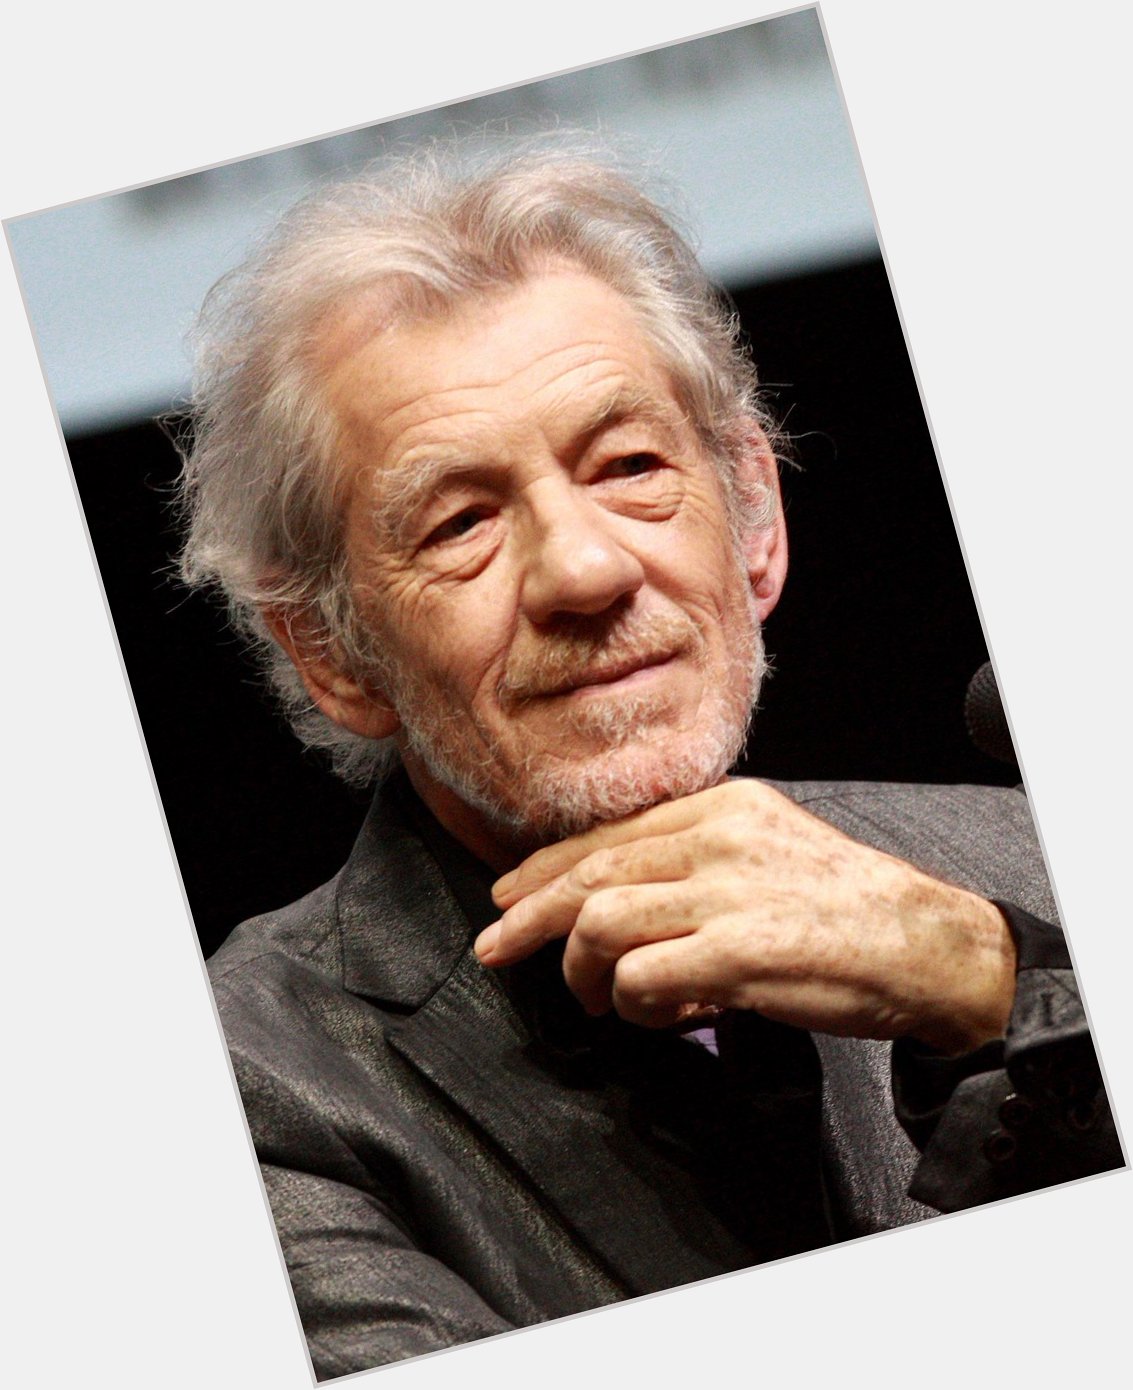 Happy 83rd birthday to the legendary Sir Ian McKellen! 